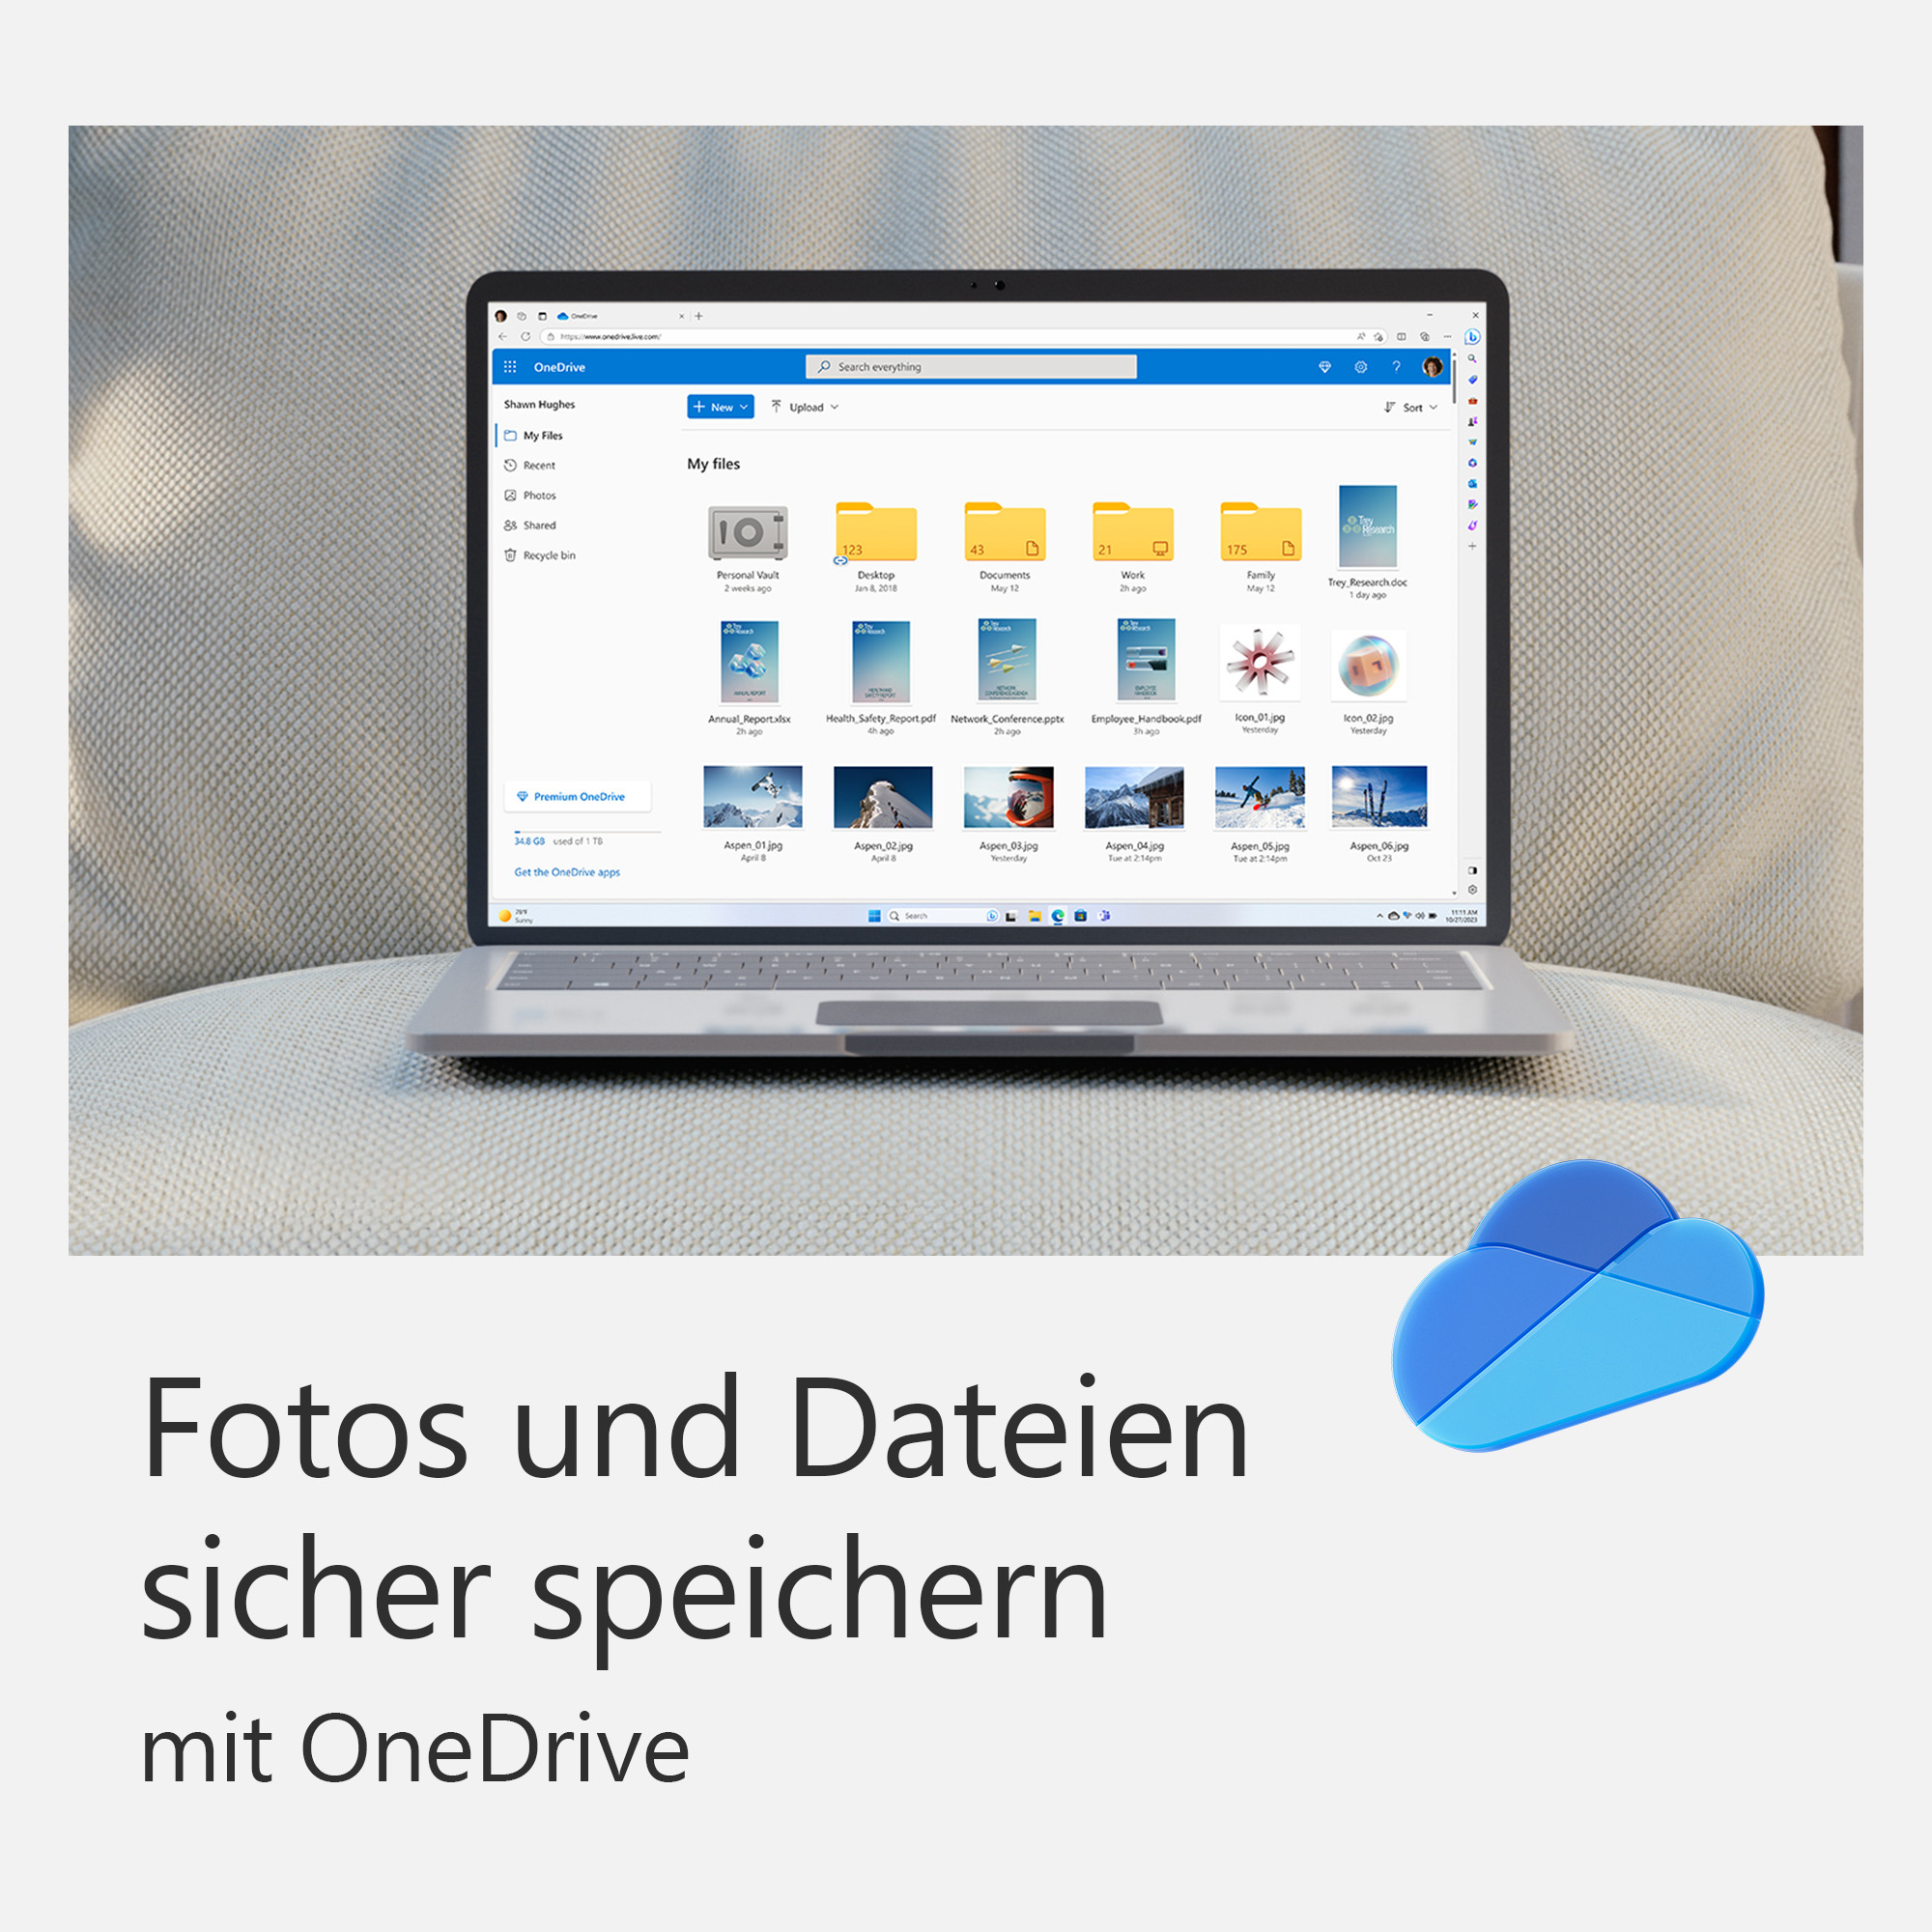 Microsoft 365 Single - PC/MAC - tedesco